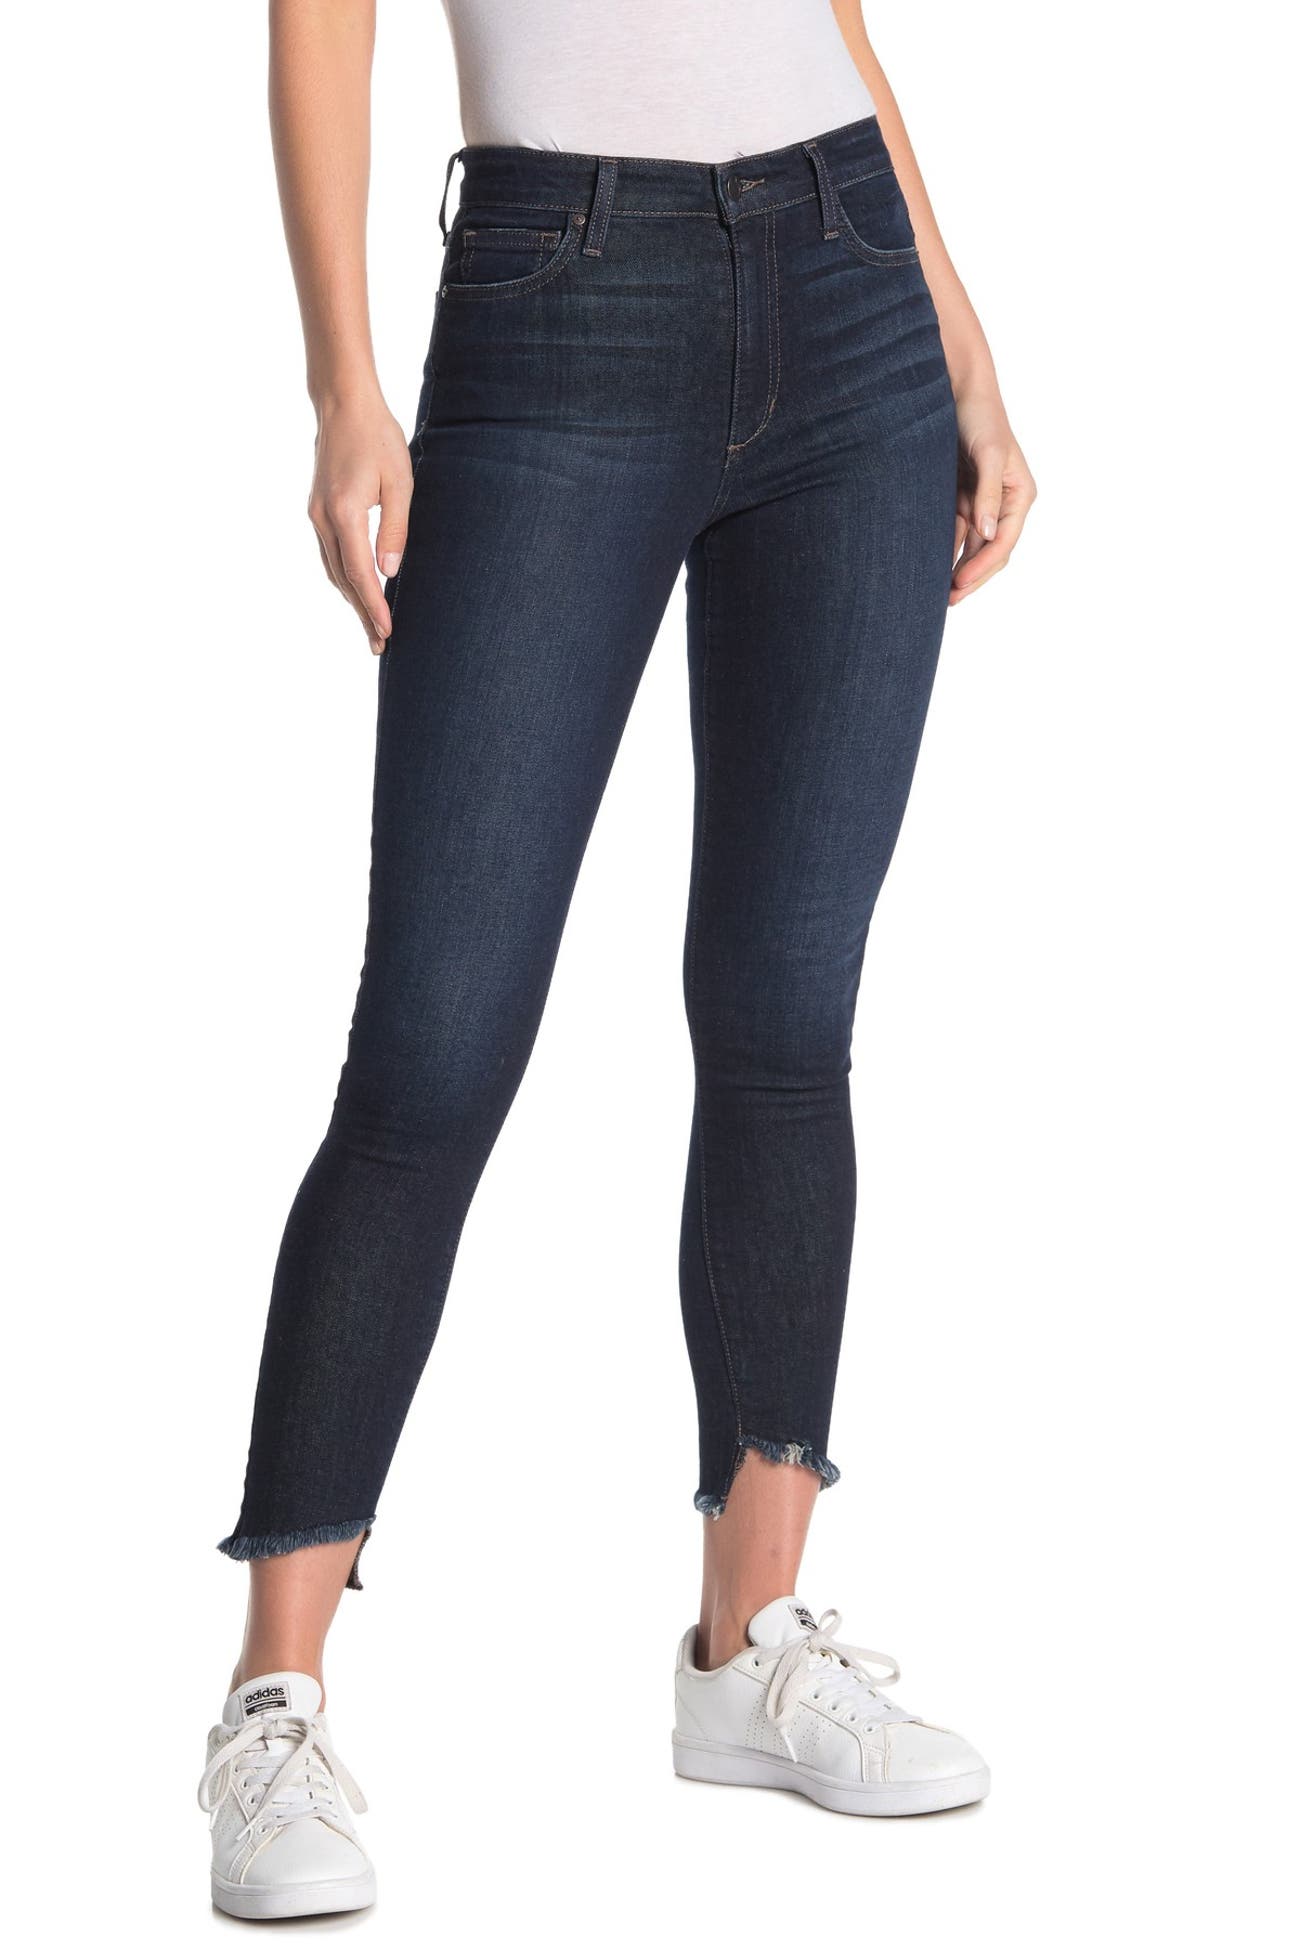 Joe's Jeans | High Rise Ankle Skinny Jeans | Nordstrom Rack